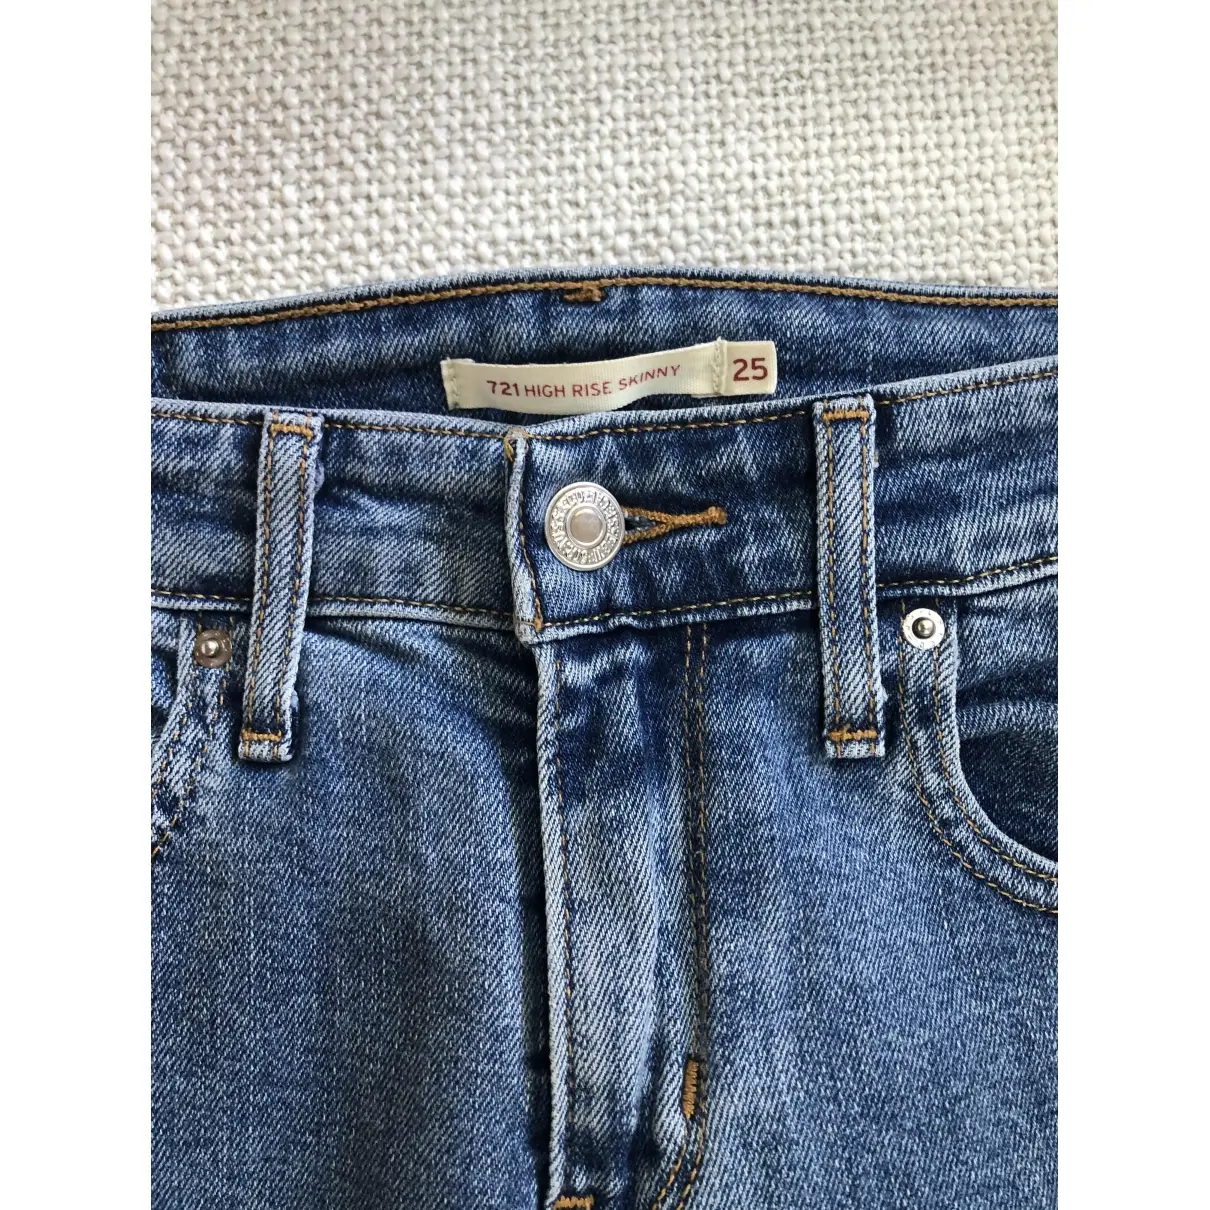 Buy Levi's 721 slim jeans online